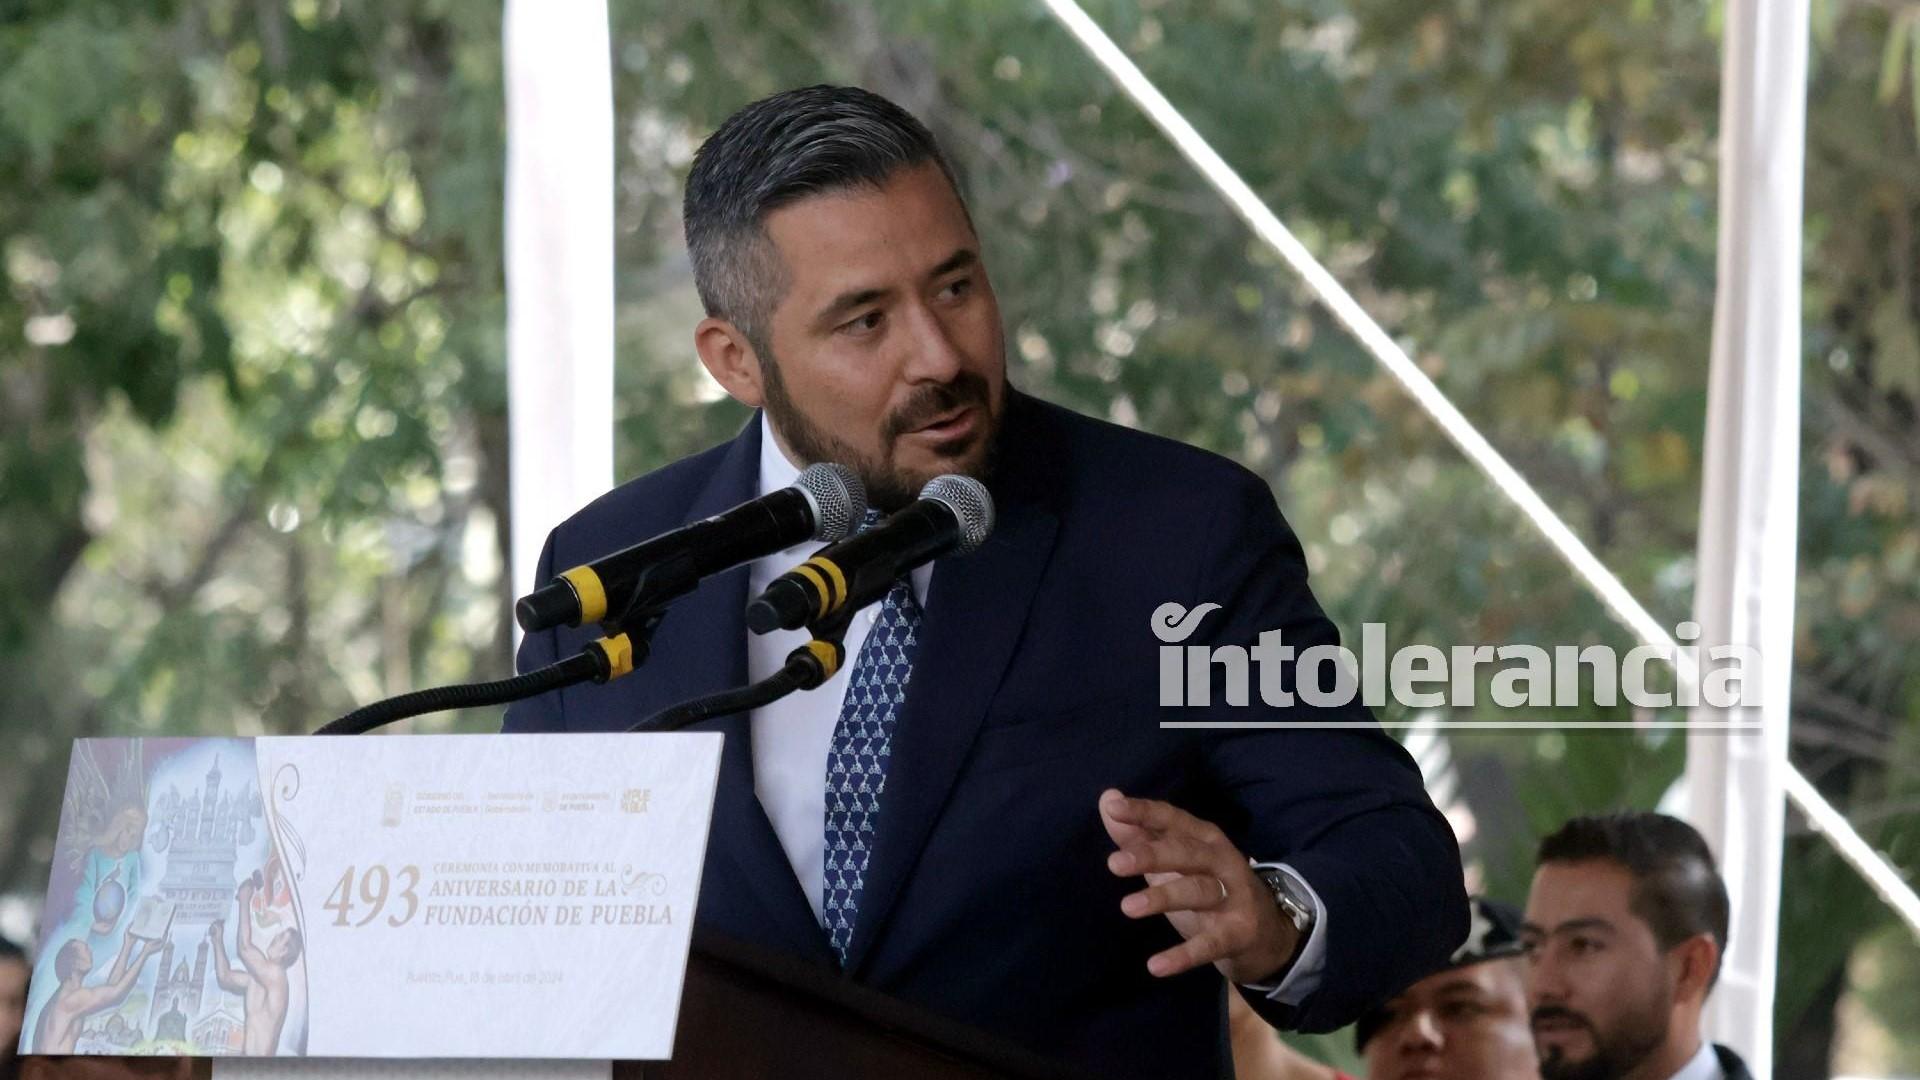 Rechaza Adán Domínguez ataques contra candidatos en Puebla